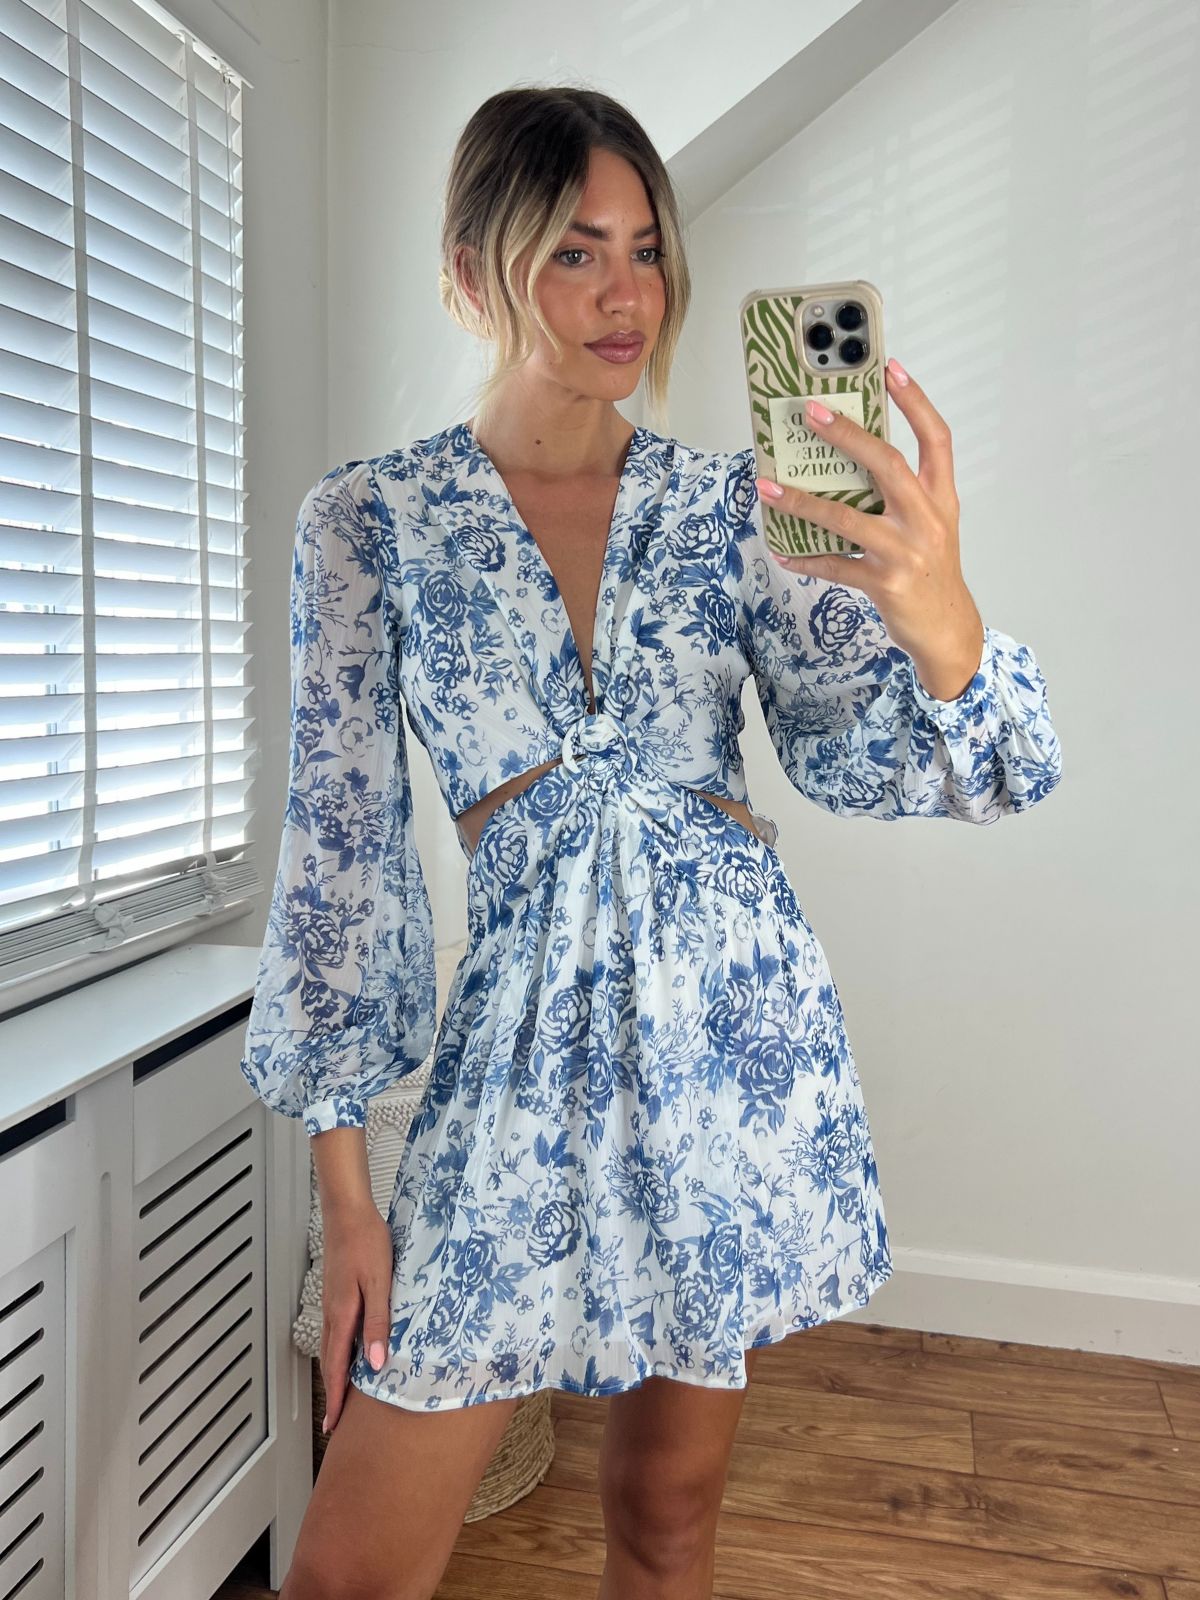 Cut Out Mini Dress | Tasha Dress in Blue & White Floral